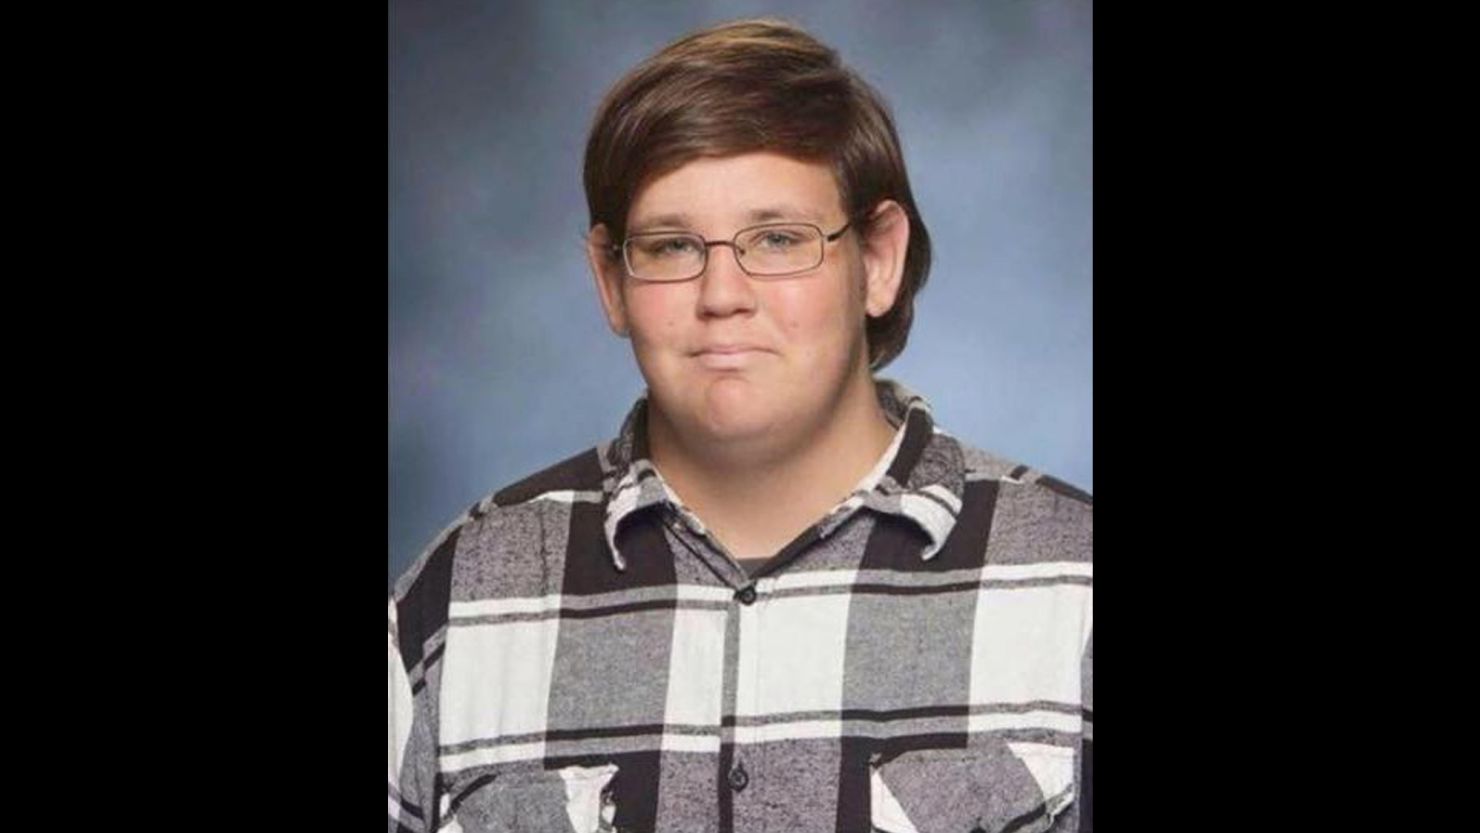 Kenneth Suttner, 17, committed suicide on December 21.